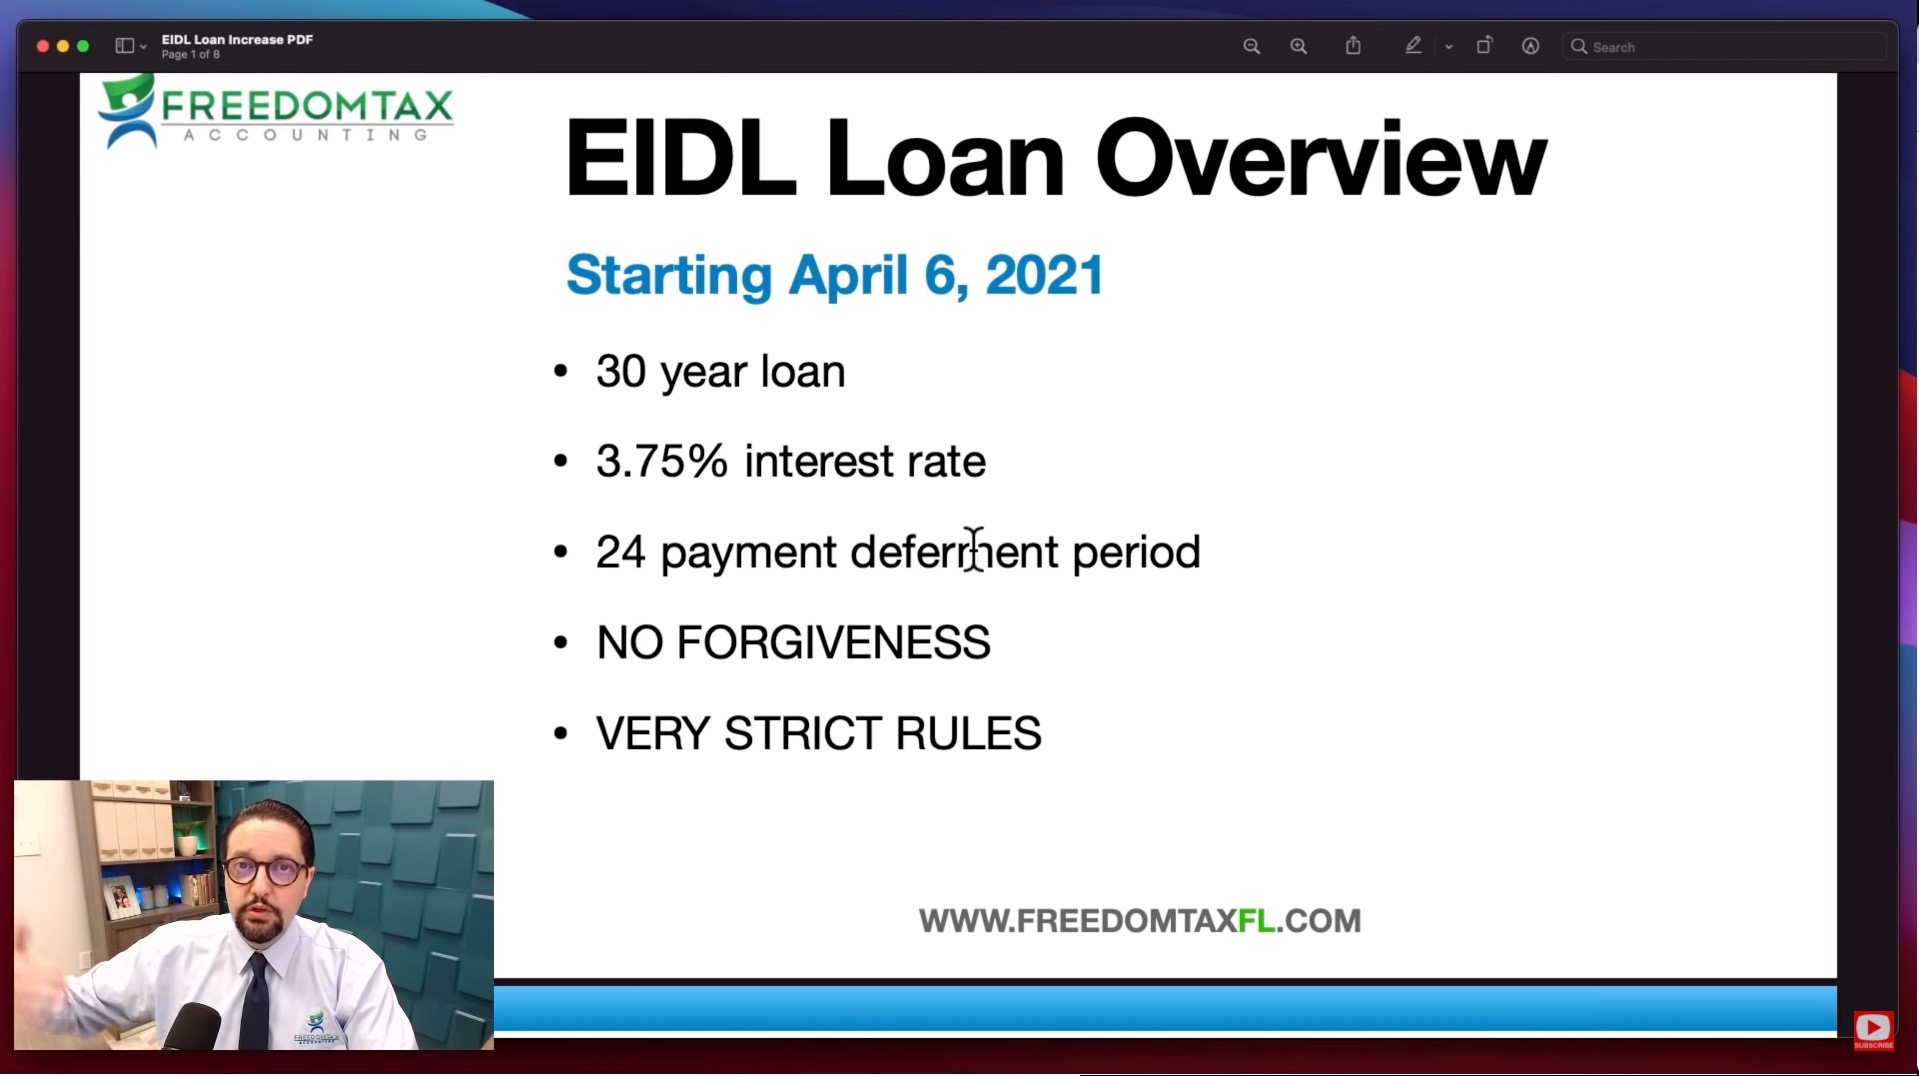 NEW SBA EIDL Loan 2021